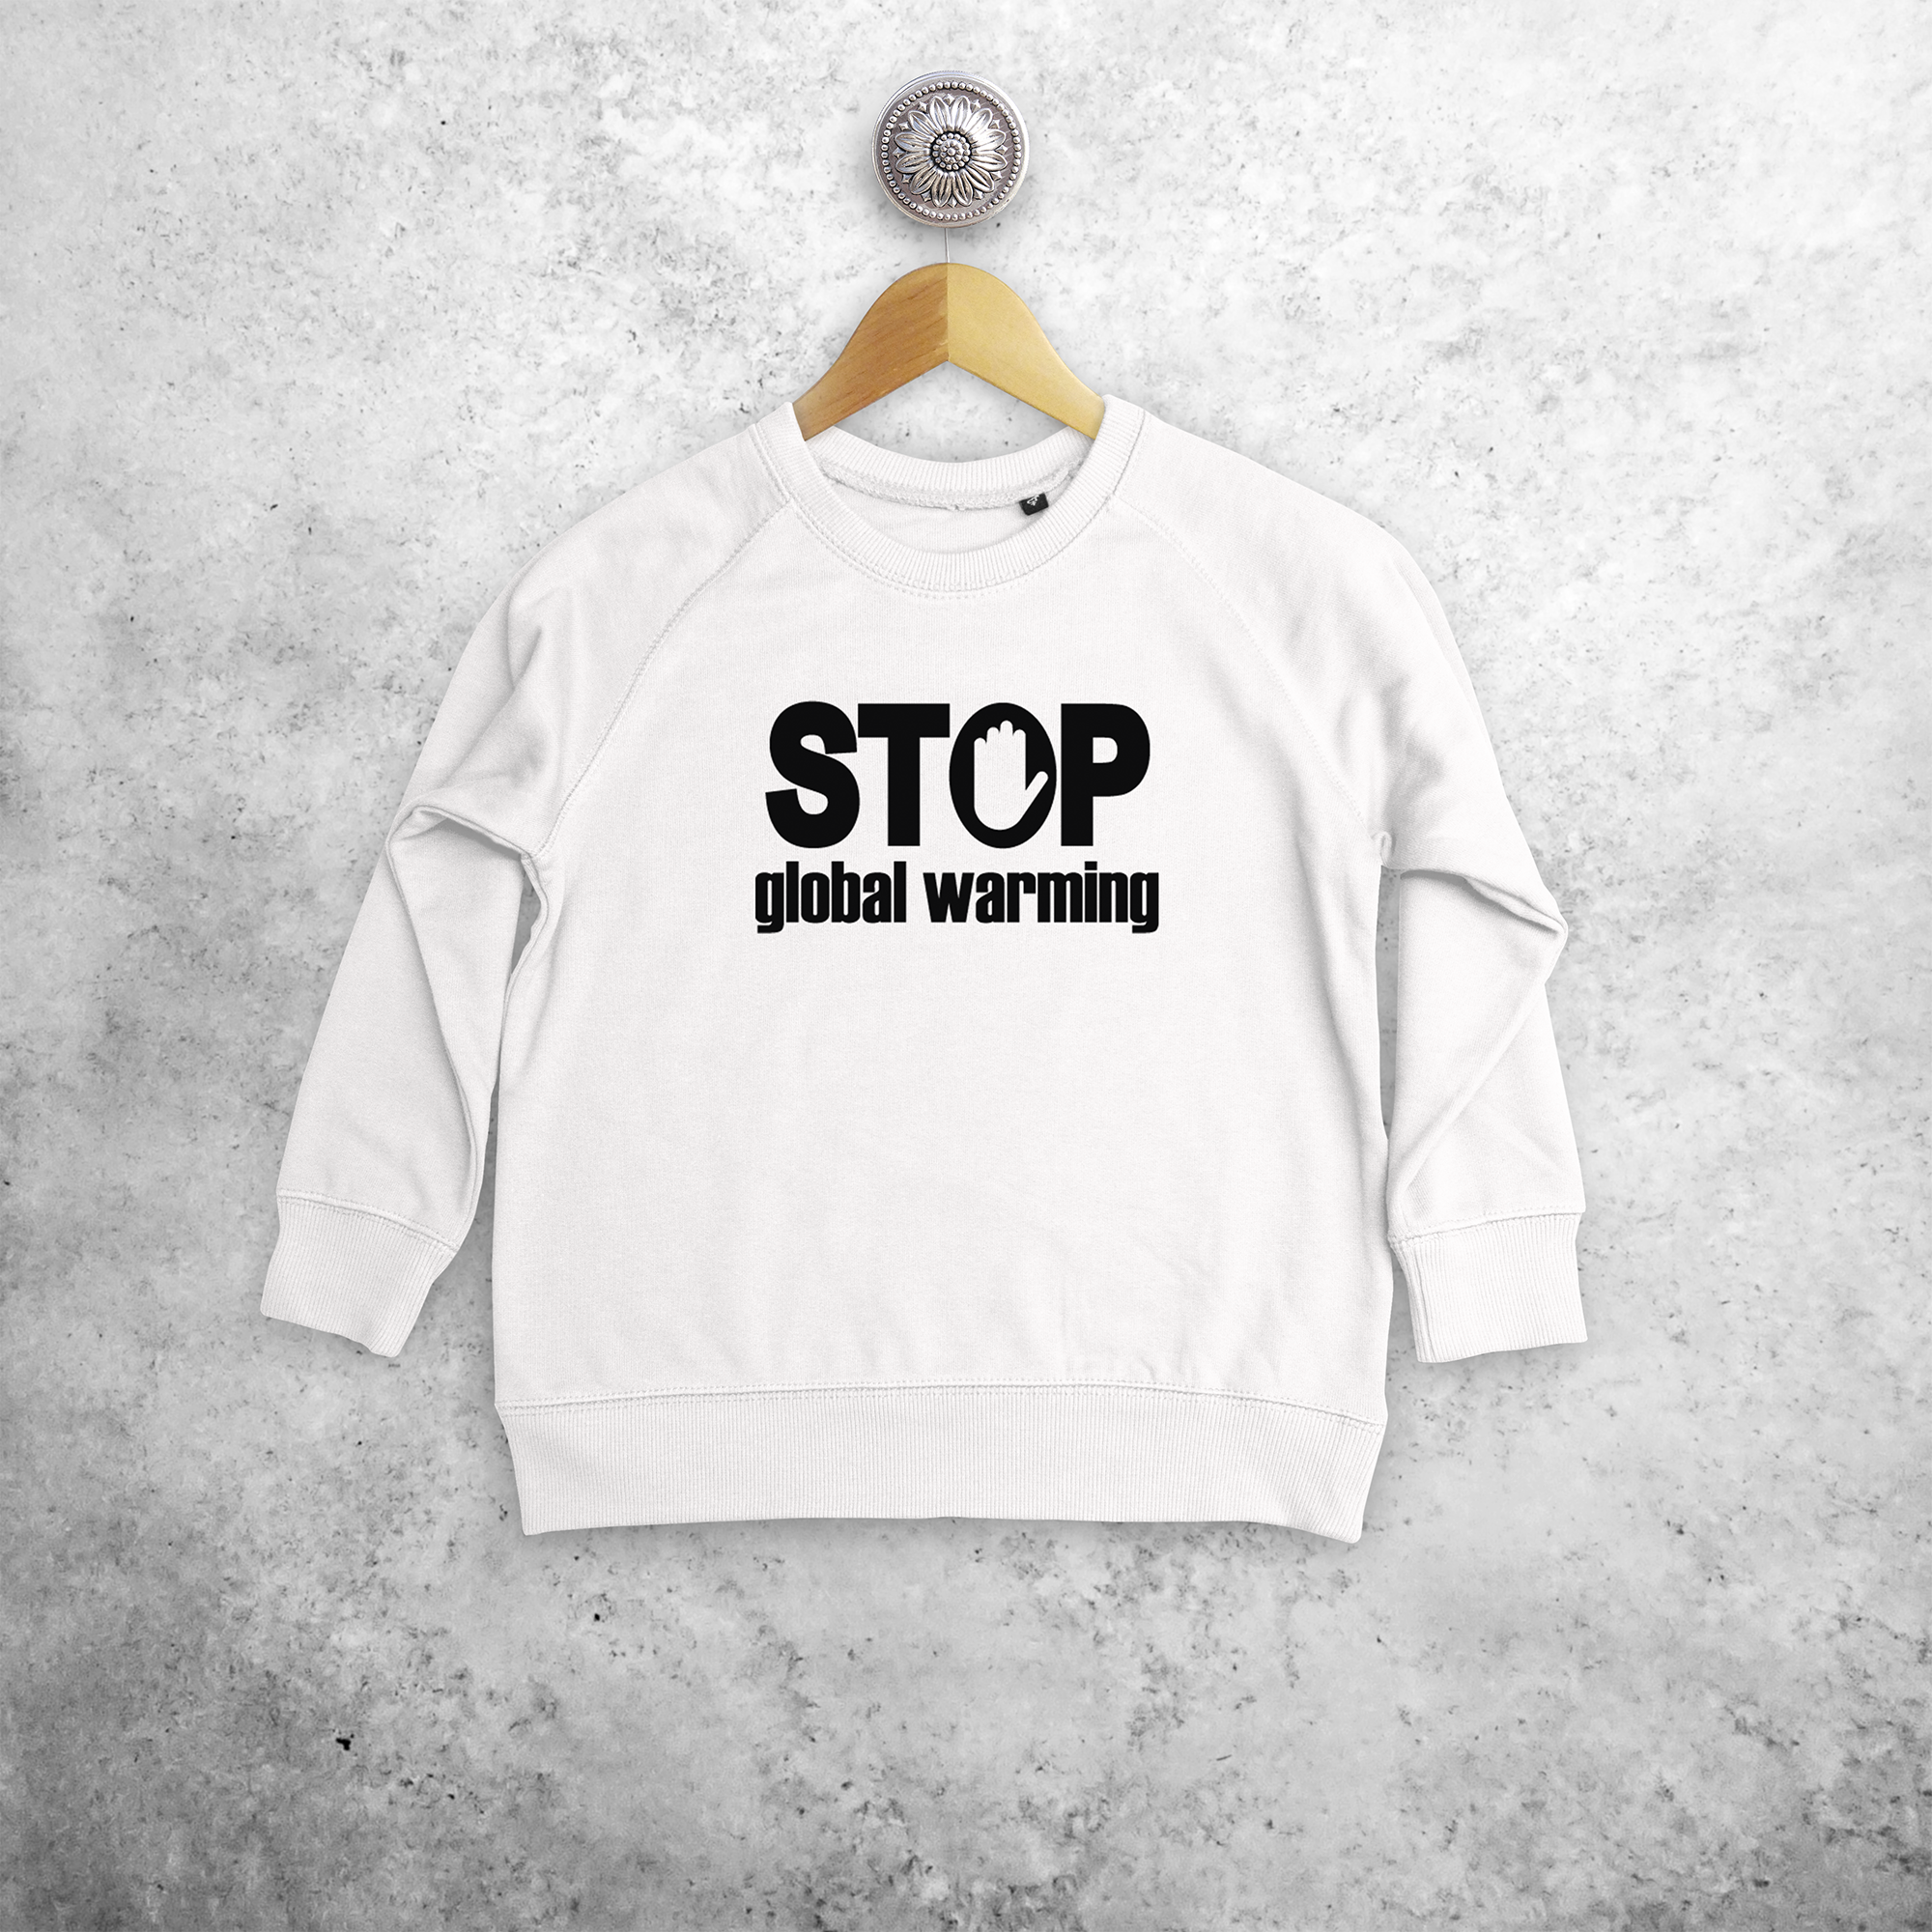 'Stop global warming' kids sweater